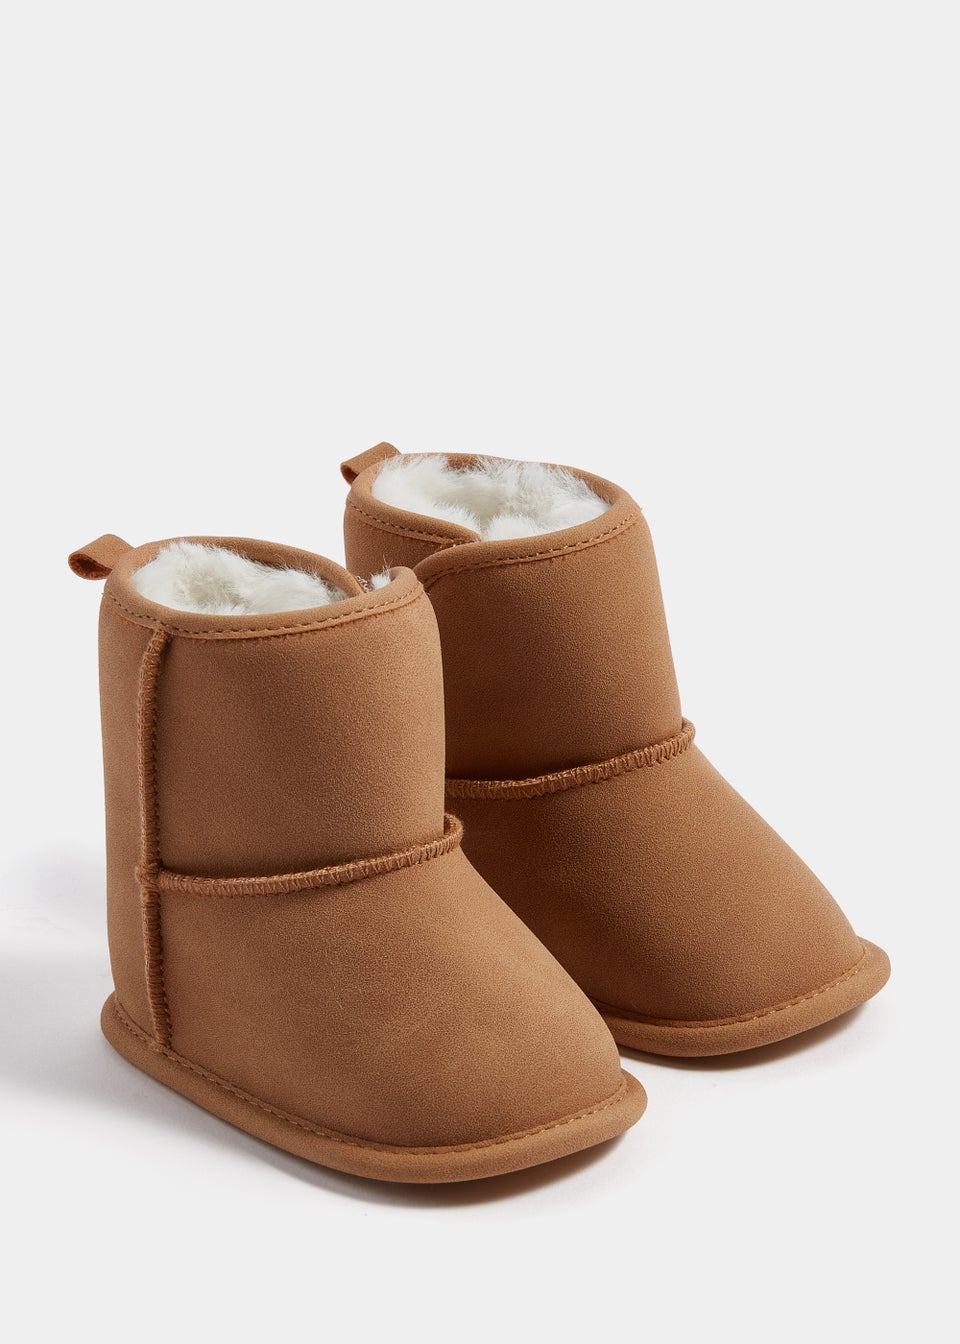 Tan Snug Soft Sole Baby Boots (Newborn-18mths)